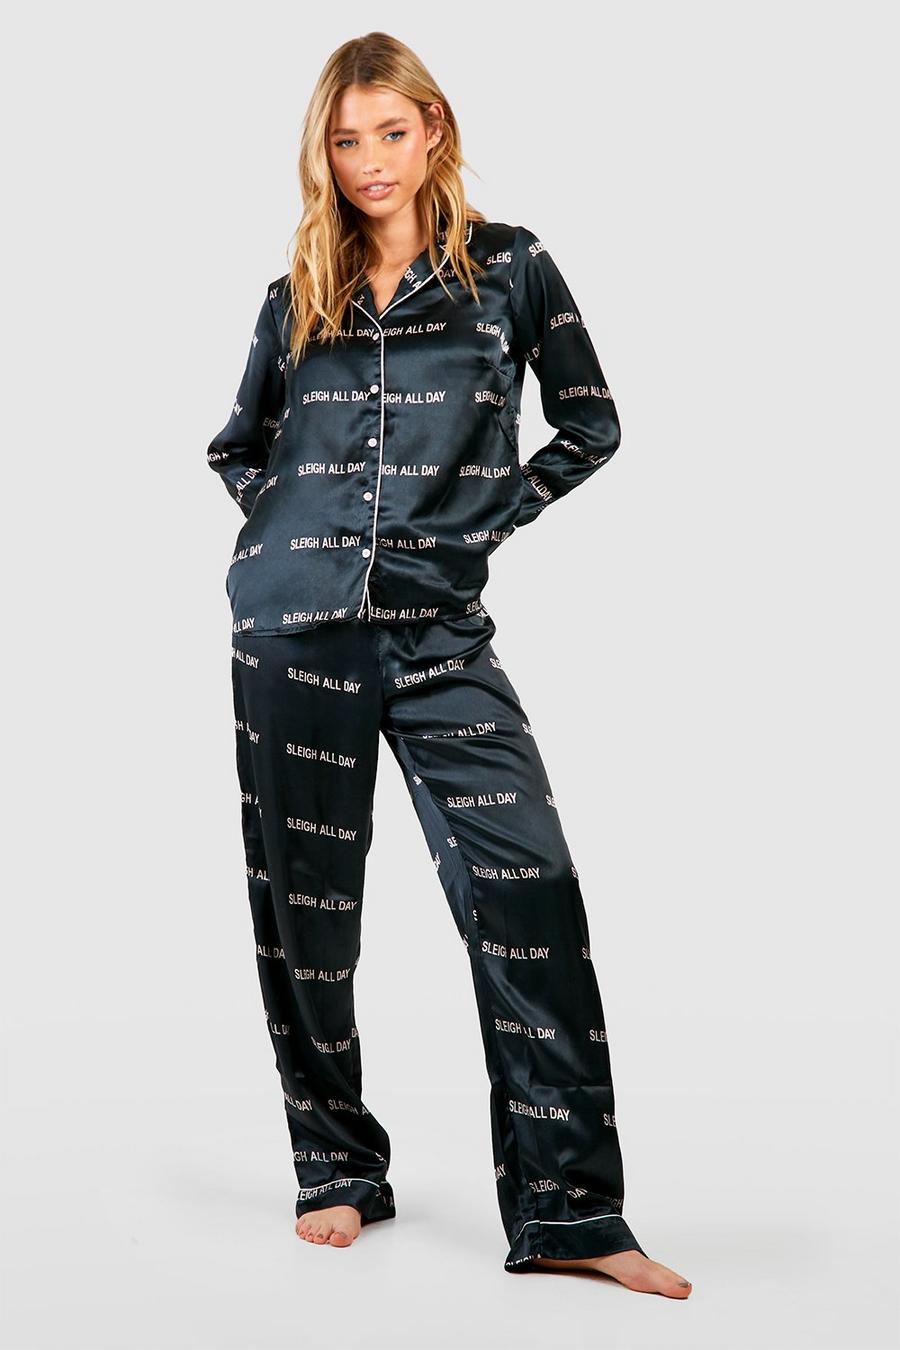 Navy Satijnen Sleigh All Day Pyjama Set